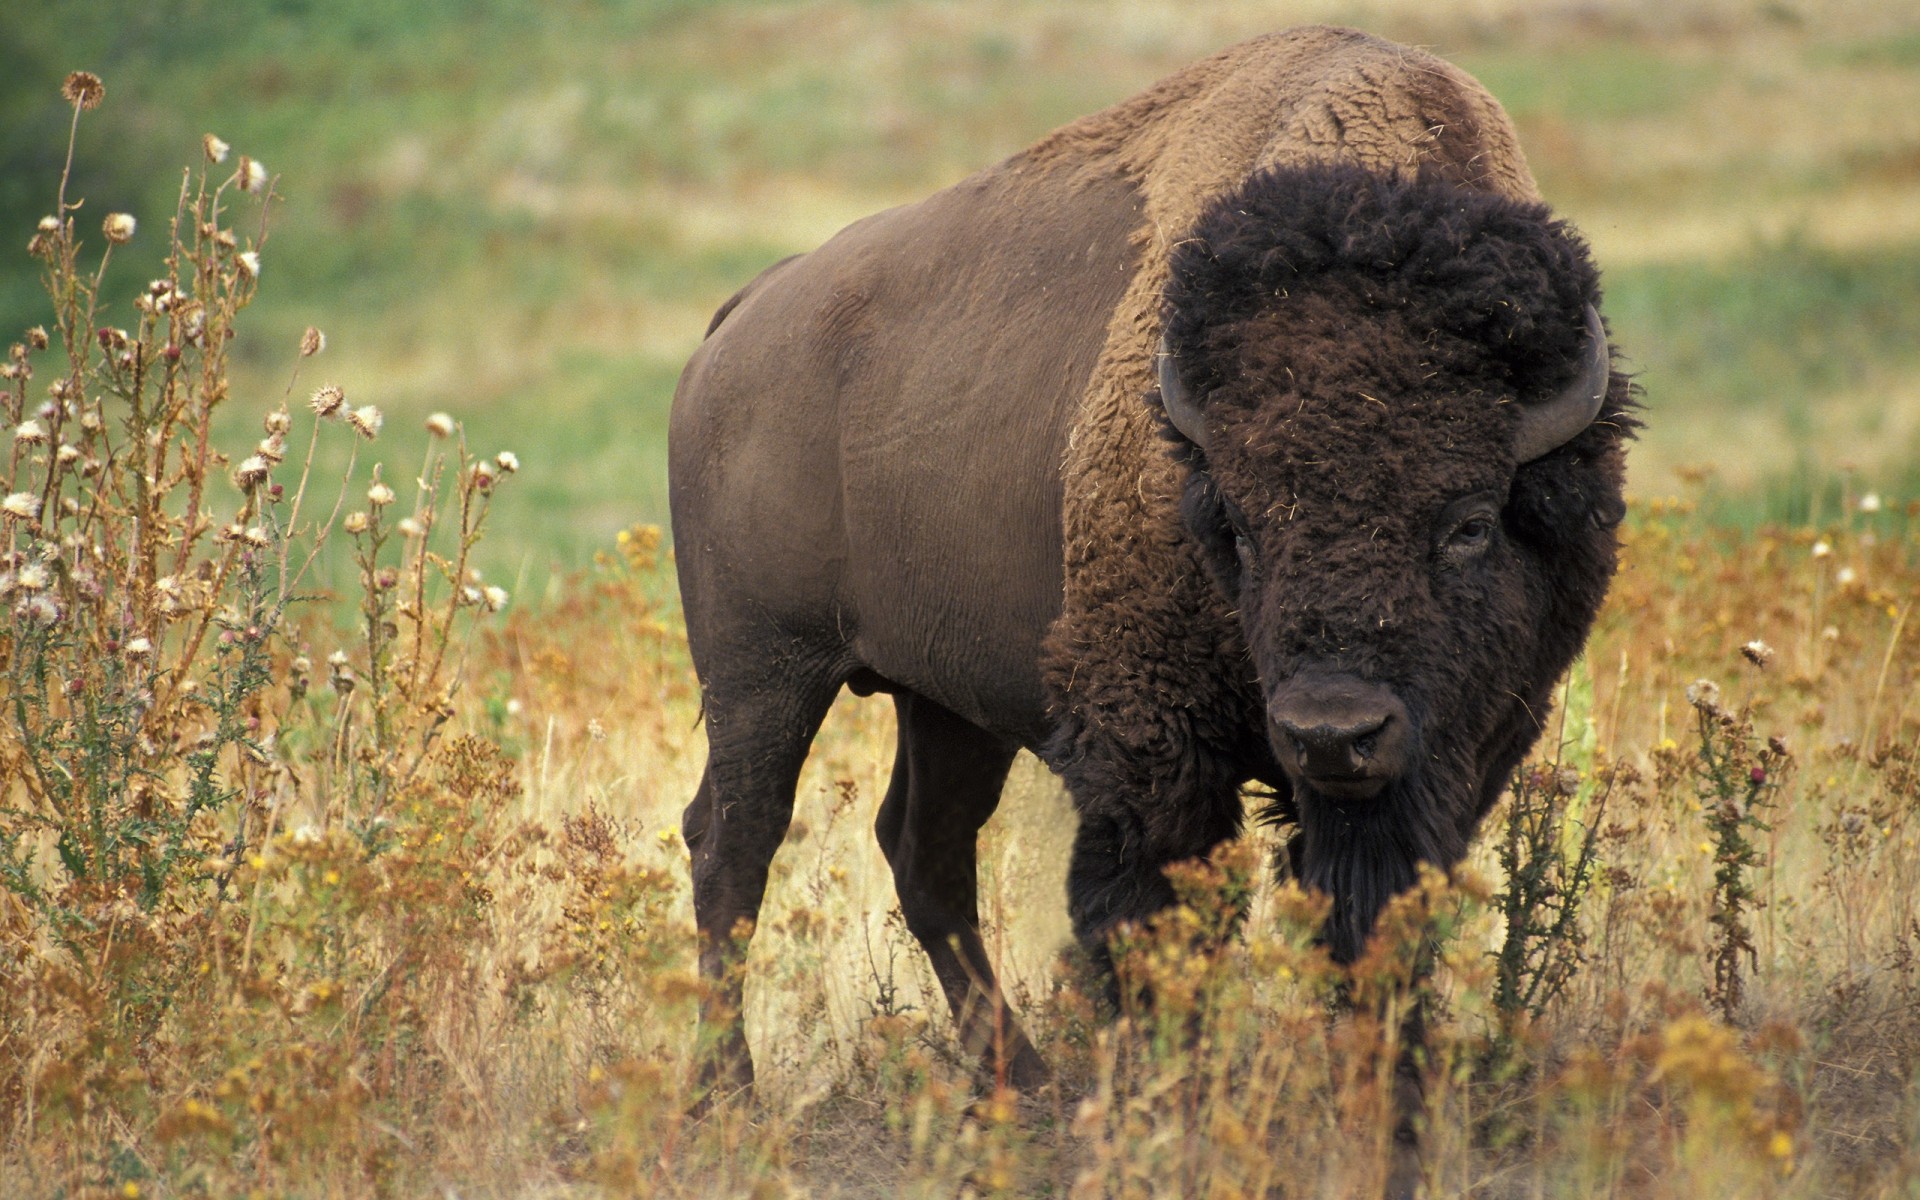 animals mammal wildlife animal grass nature outdoors grassland wild buffalo bison